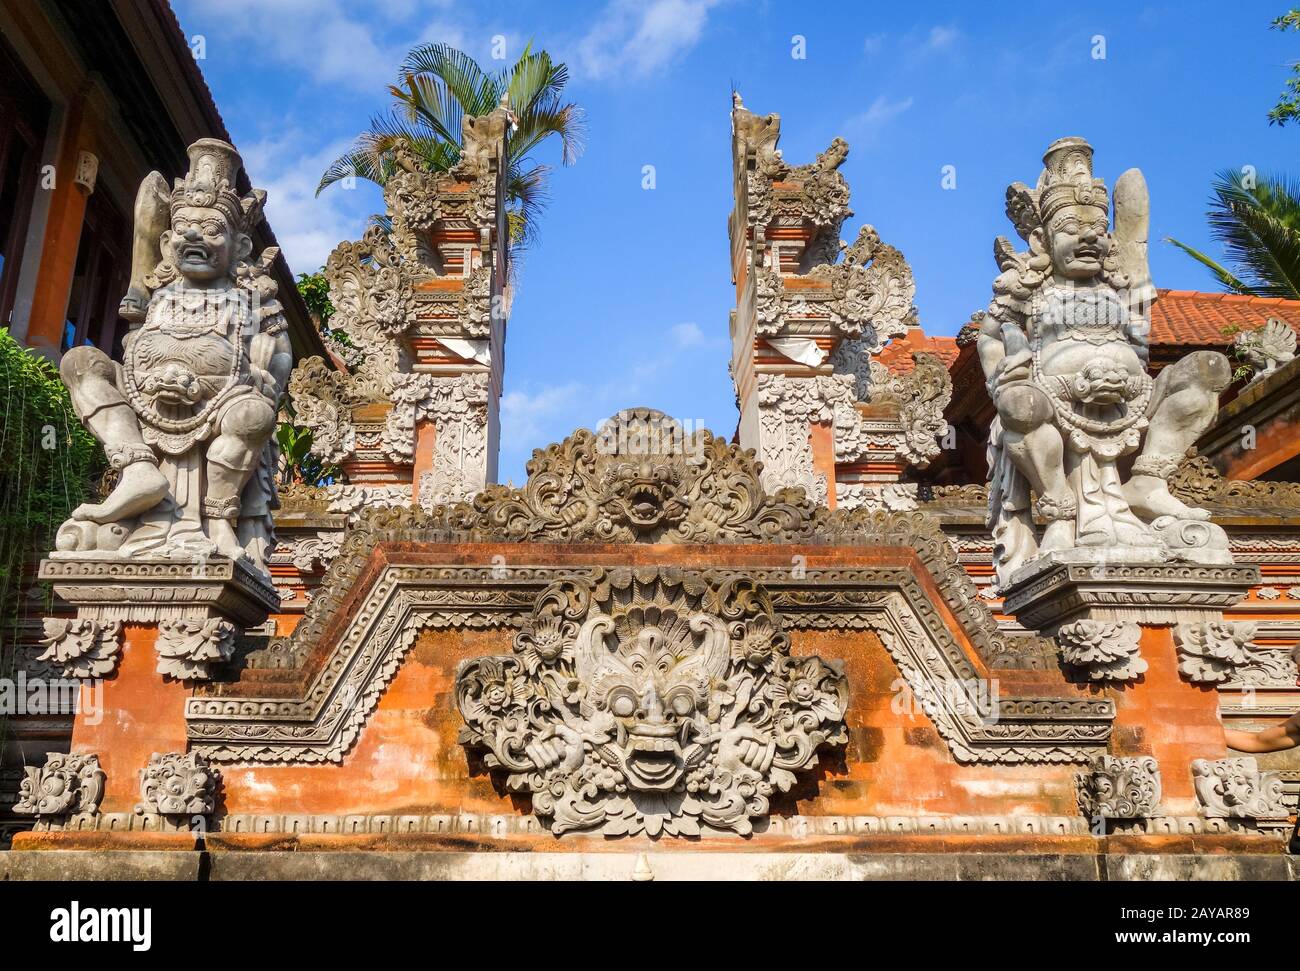 Statues on a temple entrance door, Ubud, Bali, Indonesia Stock Photo